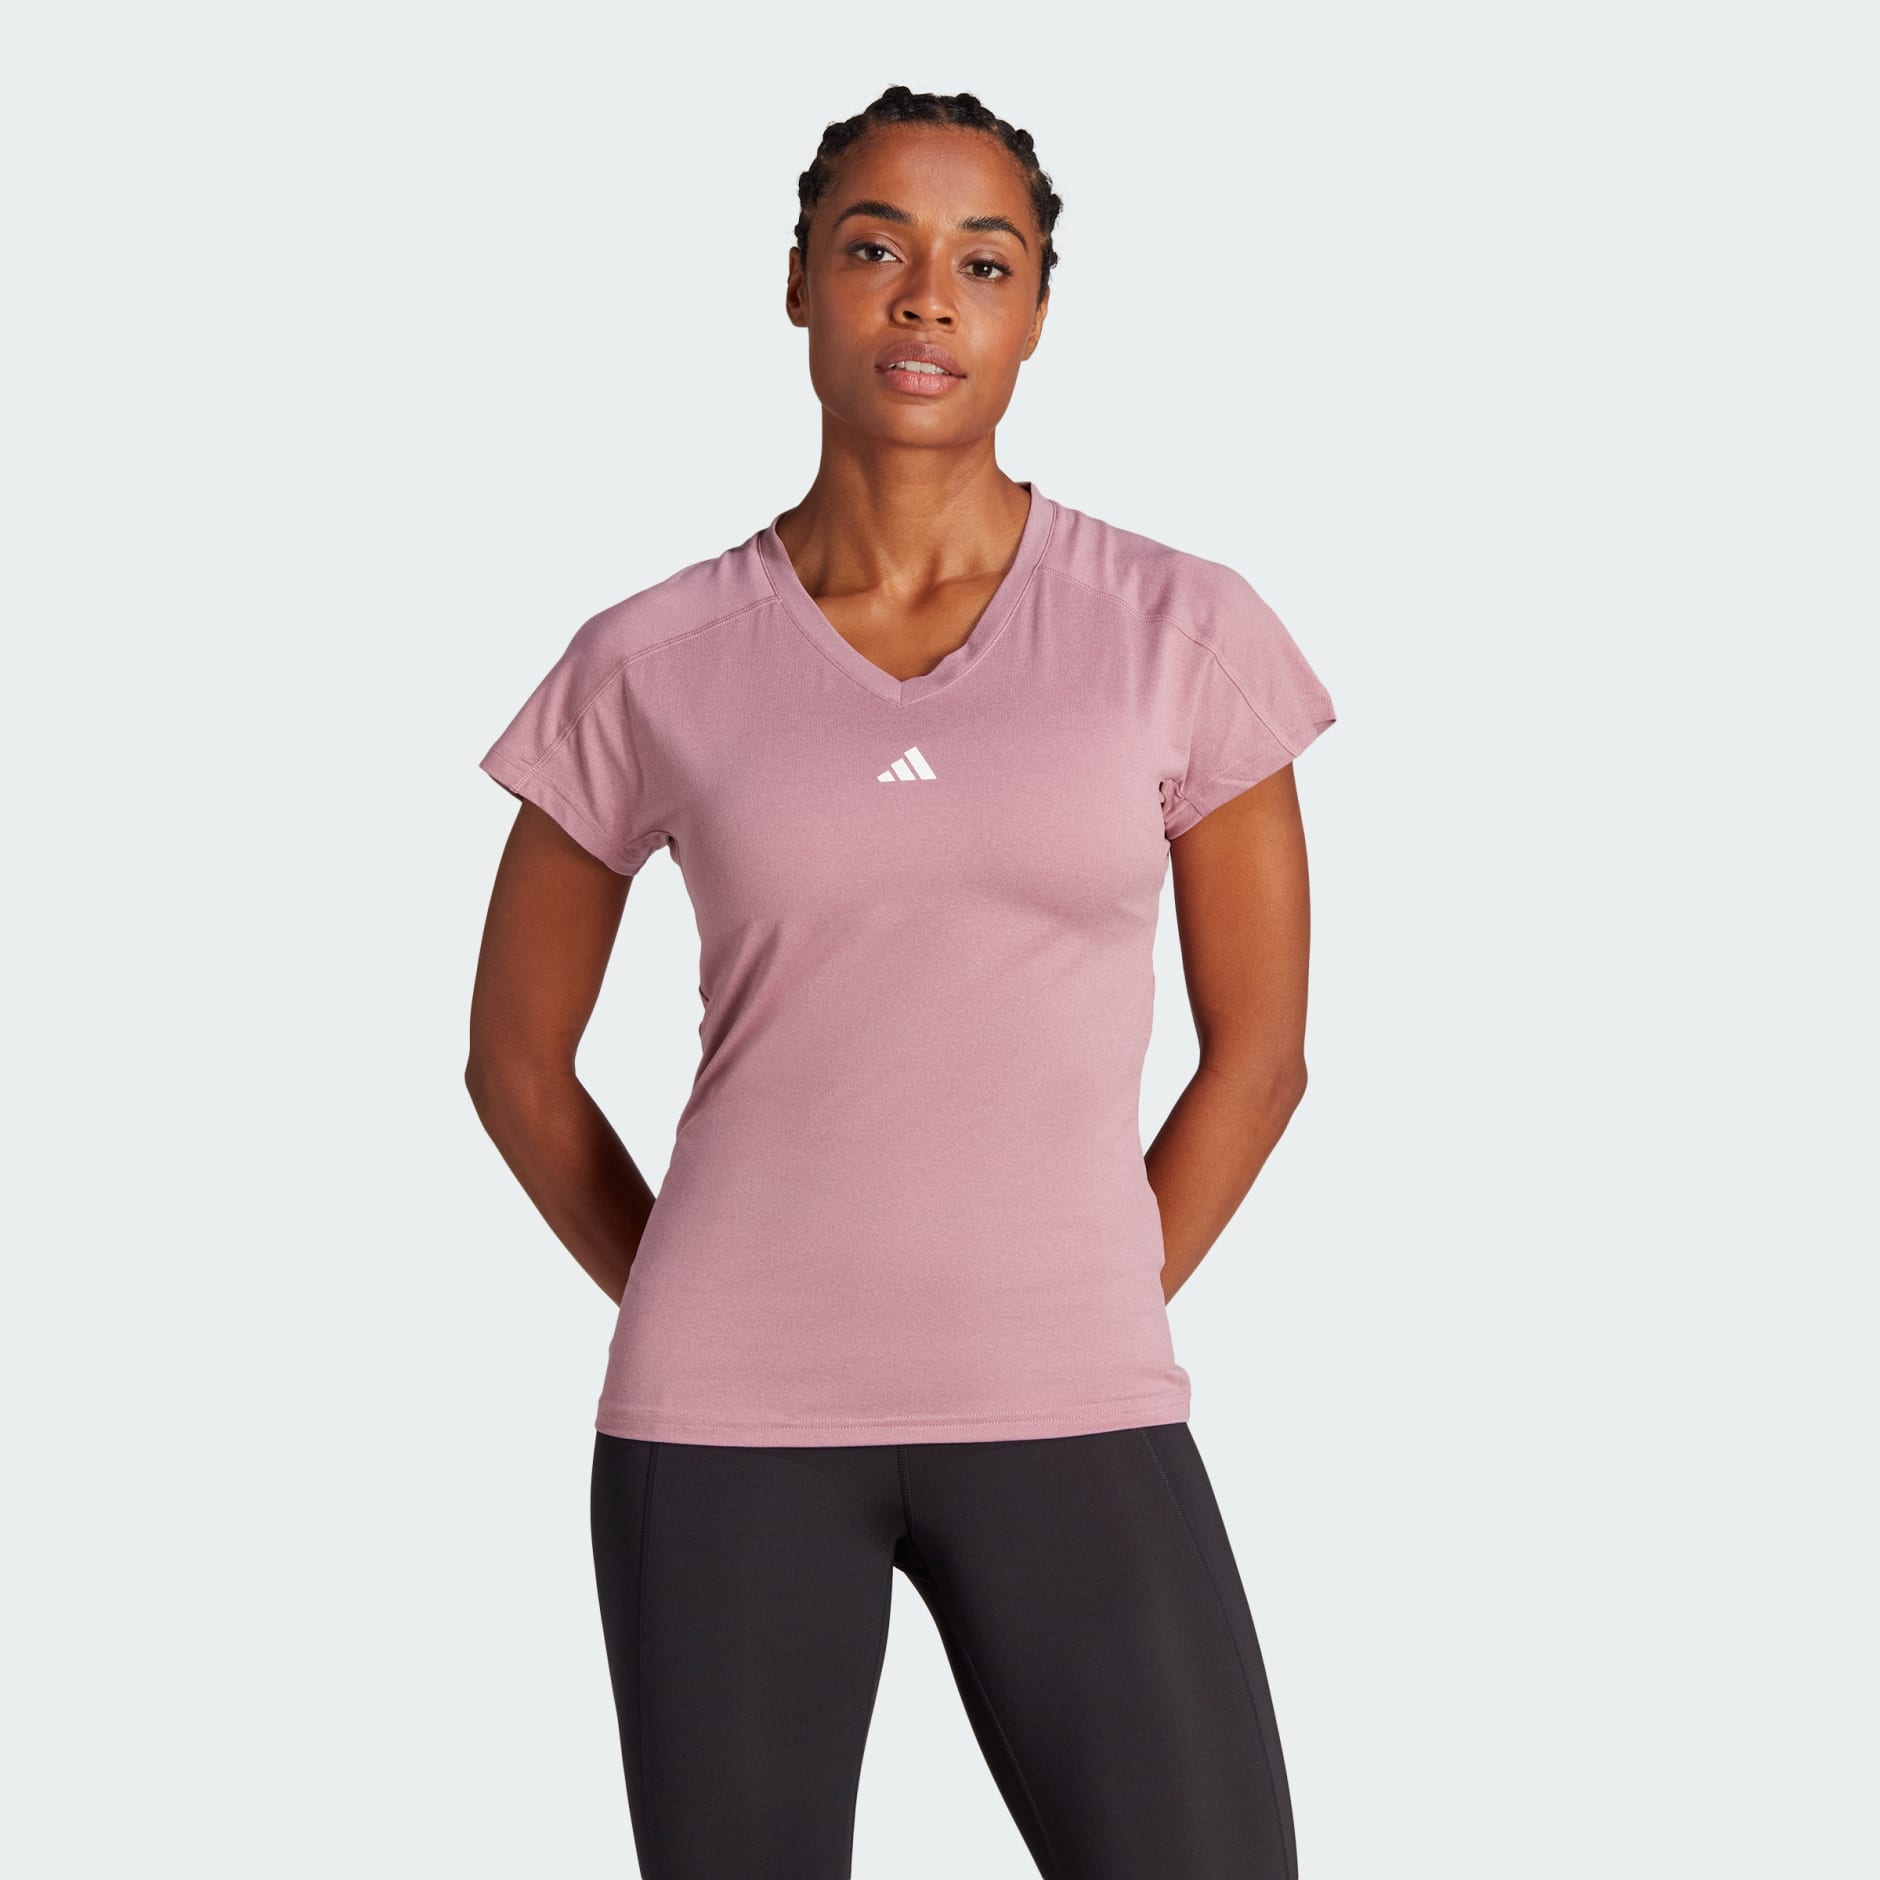 Women\'s Clothing - AEROREADY Train Oman Branding V-Neck Minimal Essentials | adidas - Pink Tee